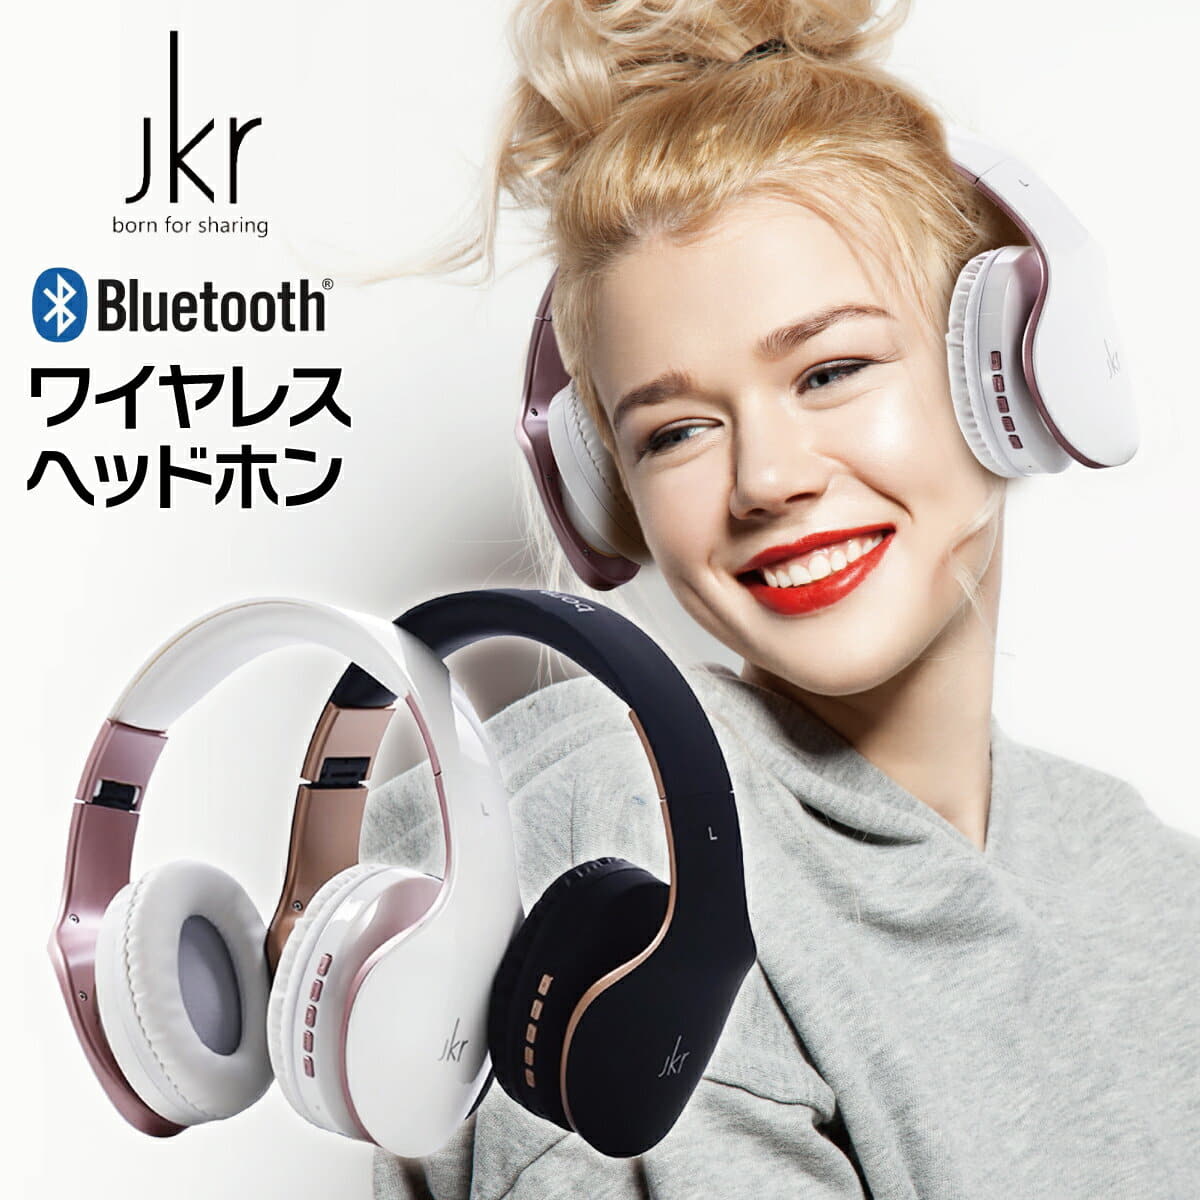 New]Bluetooth wireless headphones wireless headset headset earphone  microphone hands-free headset wireless headphones jkr-102b - BE FORWARD  Store